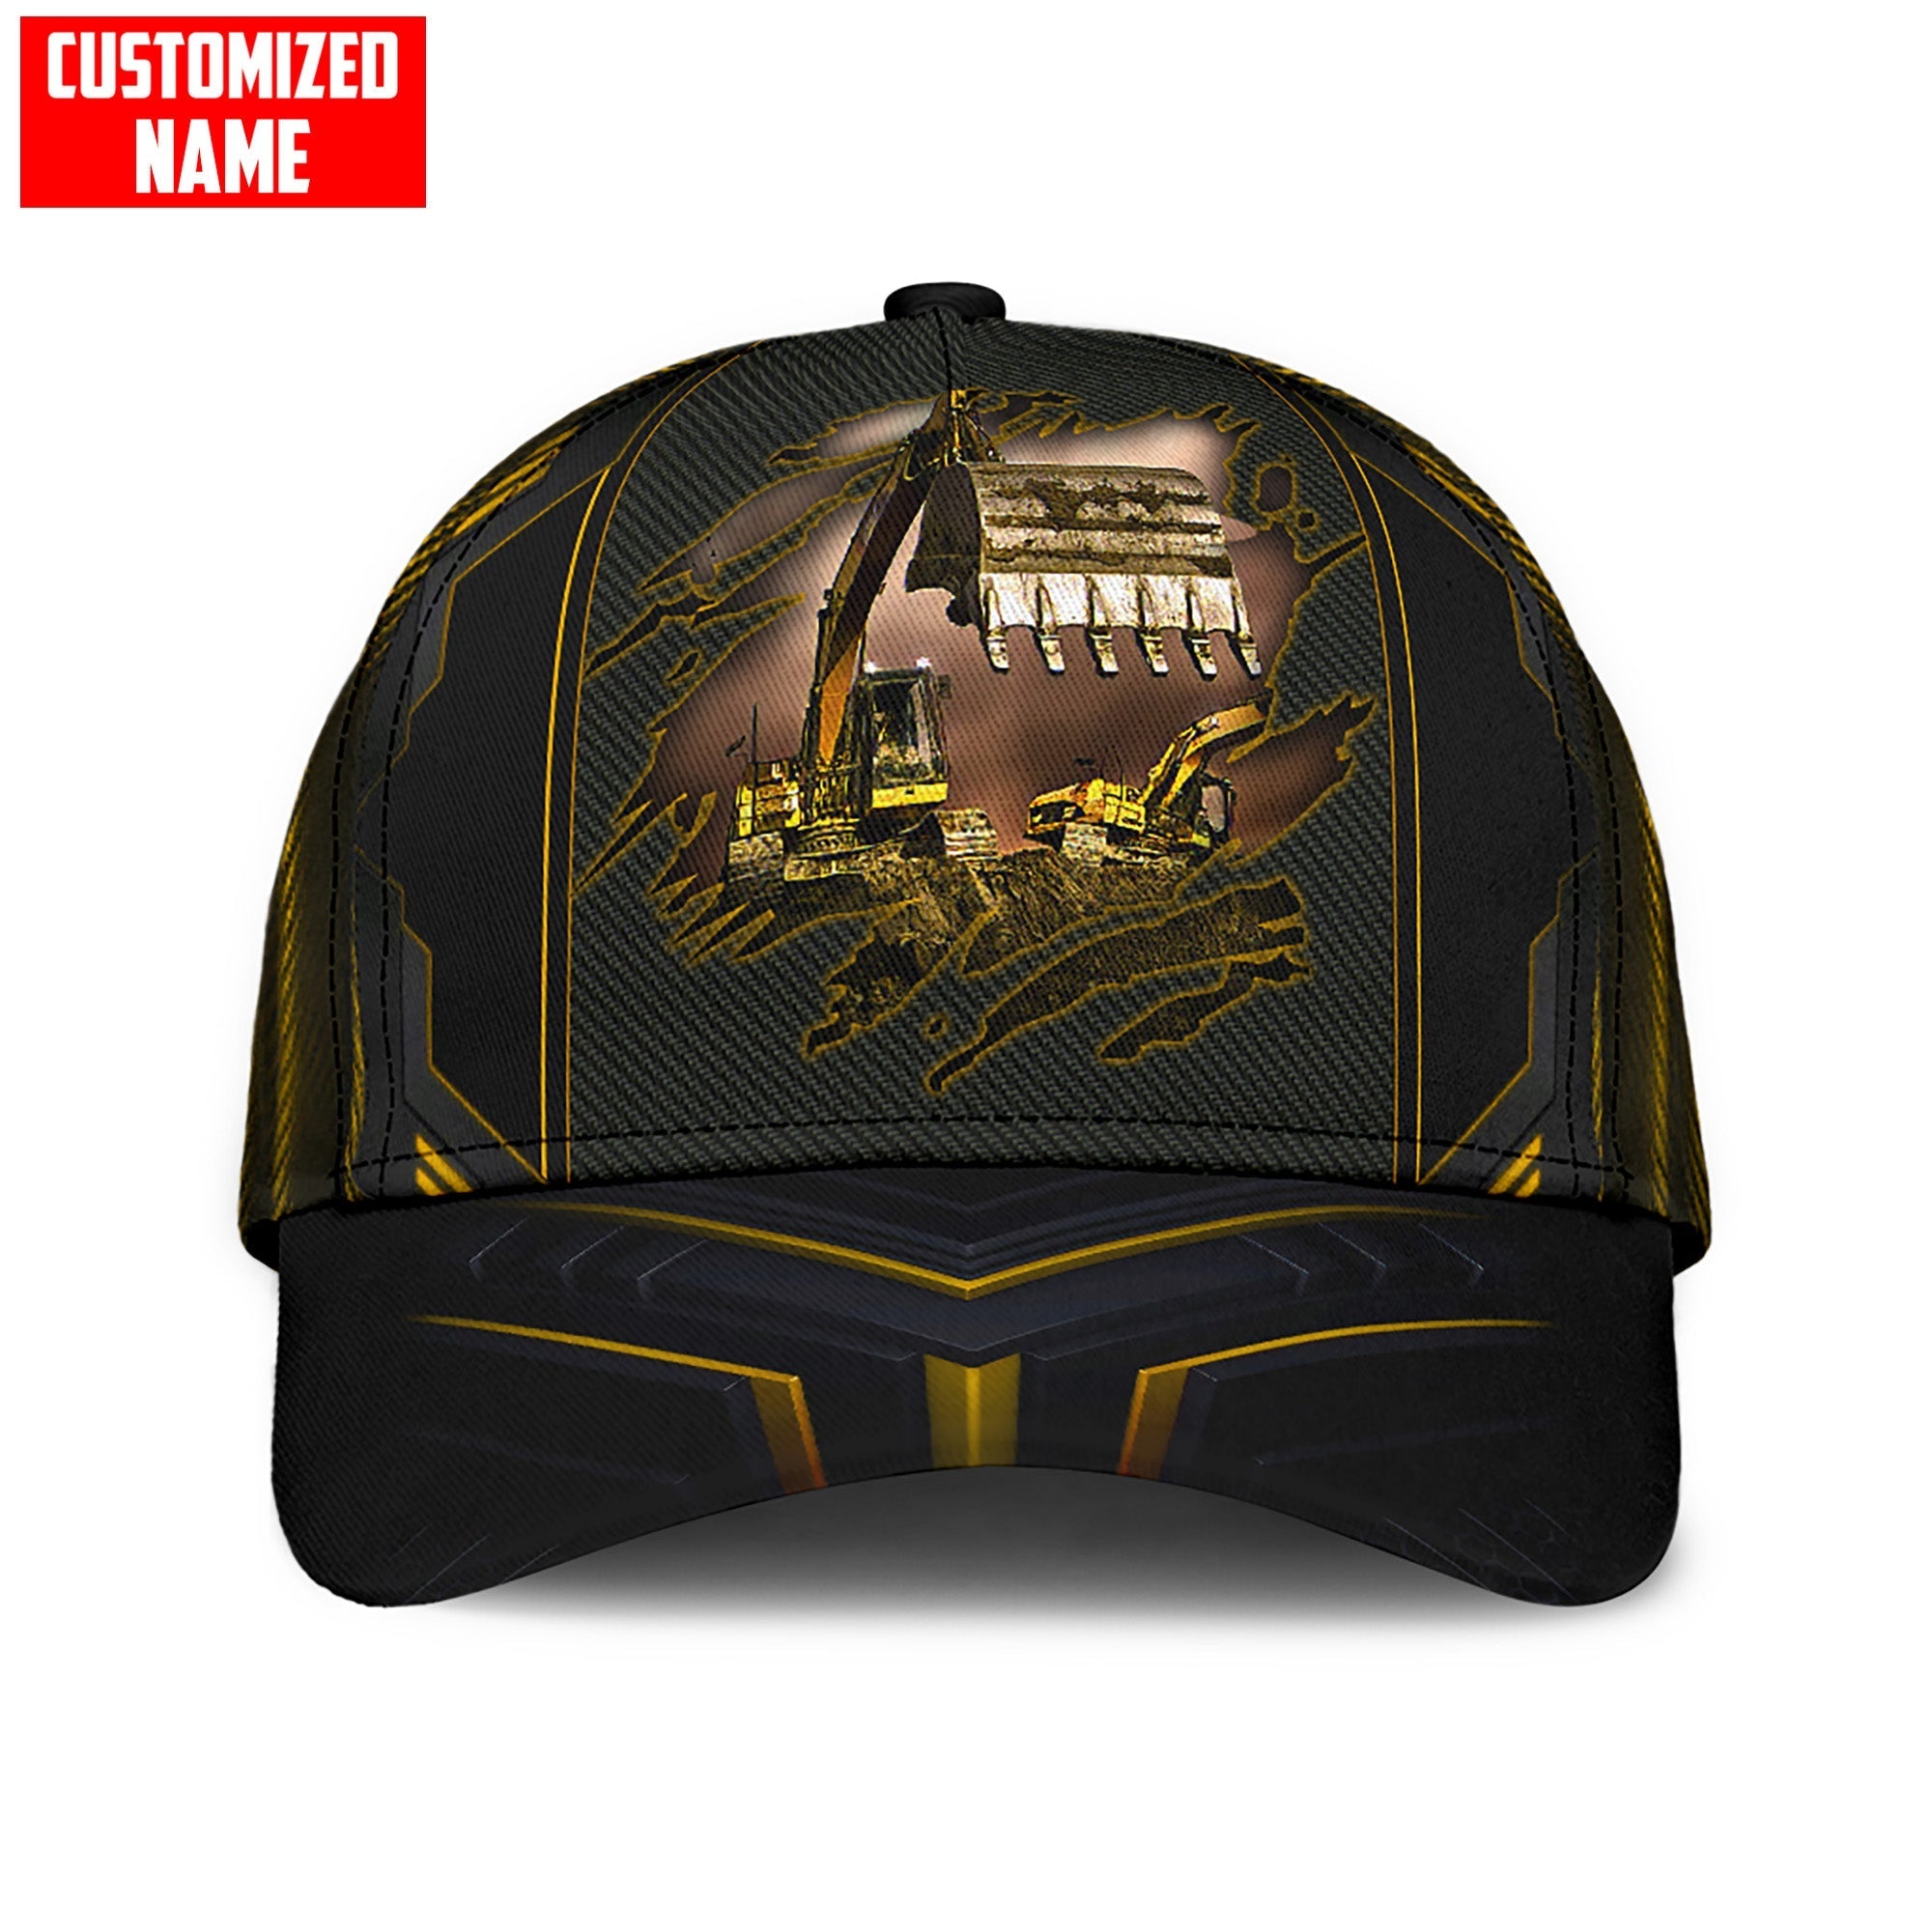 Personalized With Name Excavator 3D Full Printing Classic Cap Hat/ Excavator Baseball Cap Hat